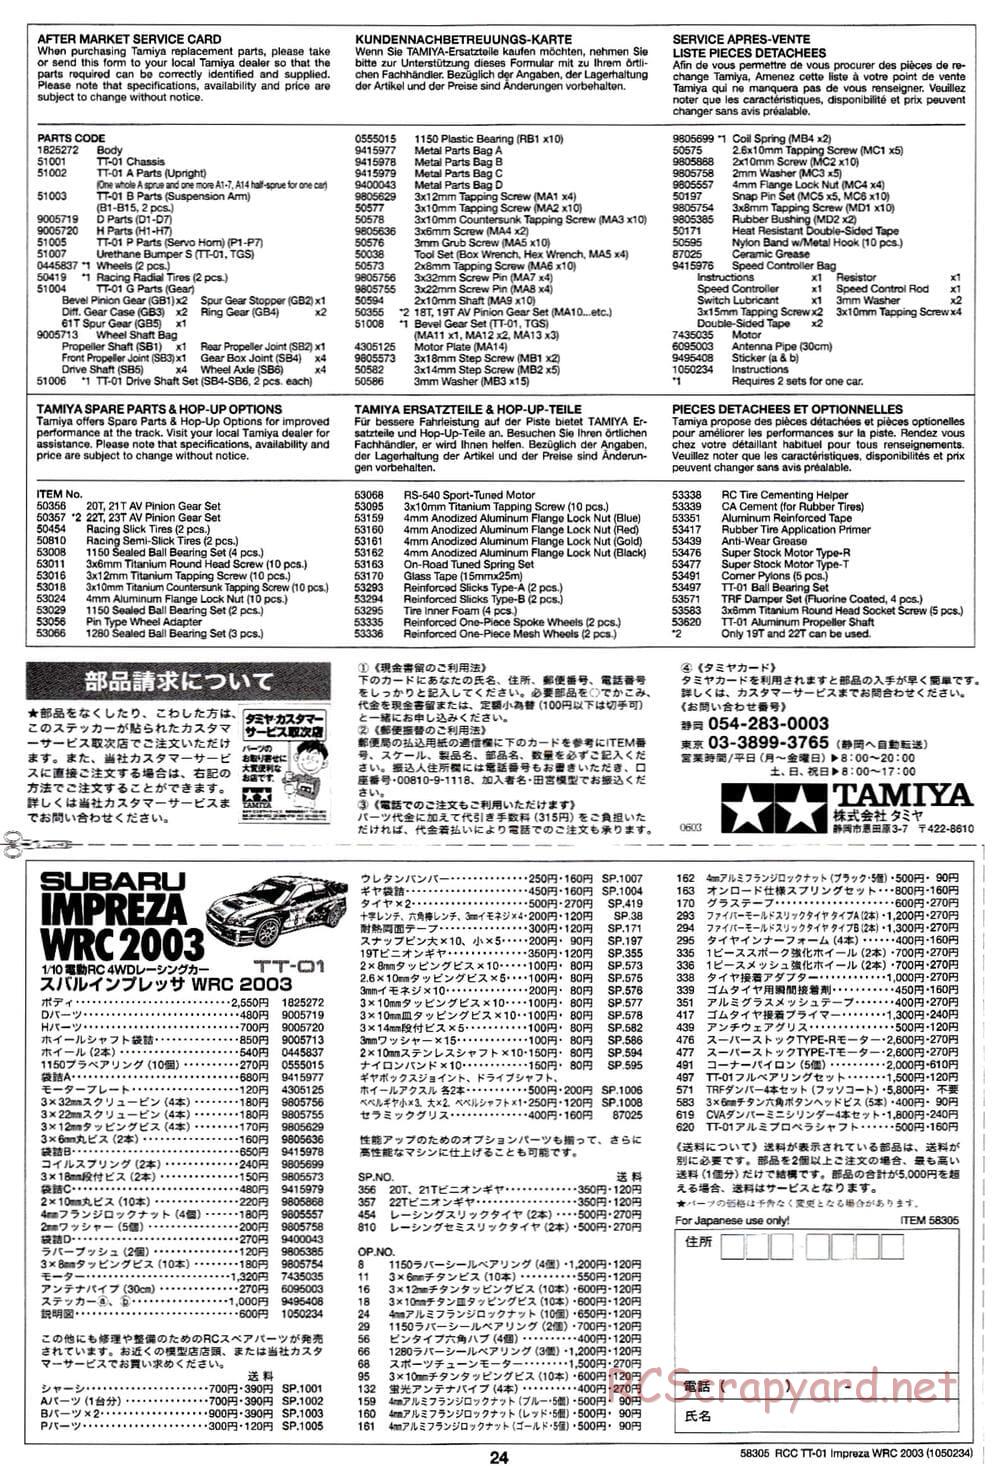 Tamiya - Subaru Impreza WRC 2003 - TT-01 Chassis - Manual - Page 24